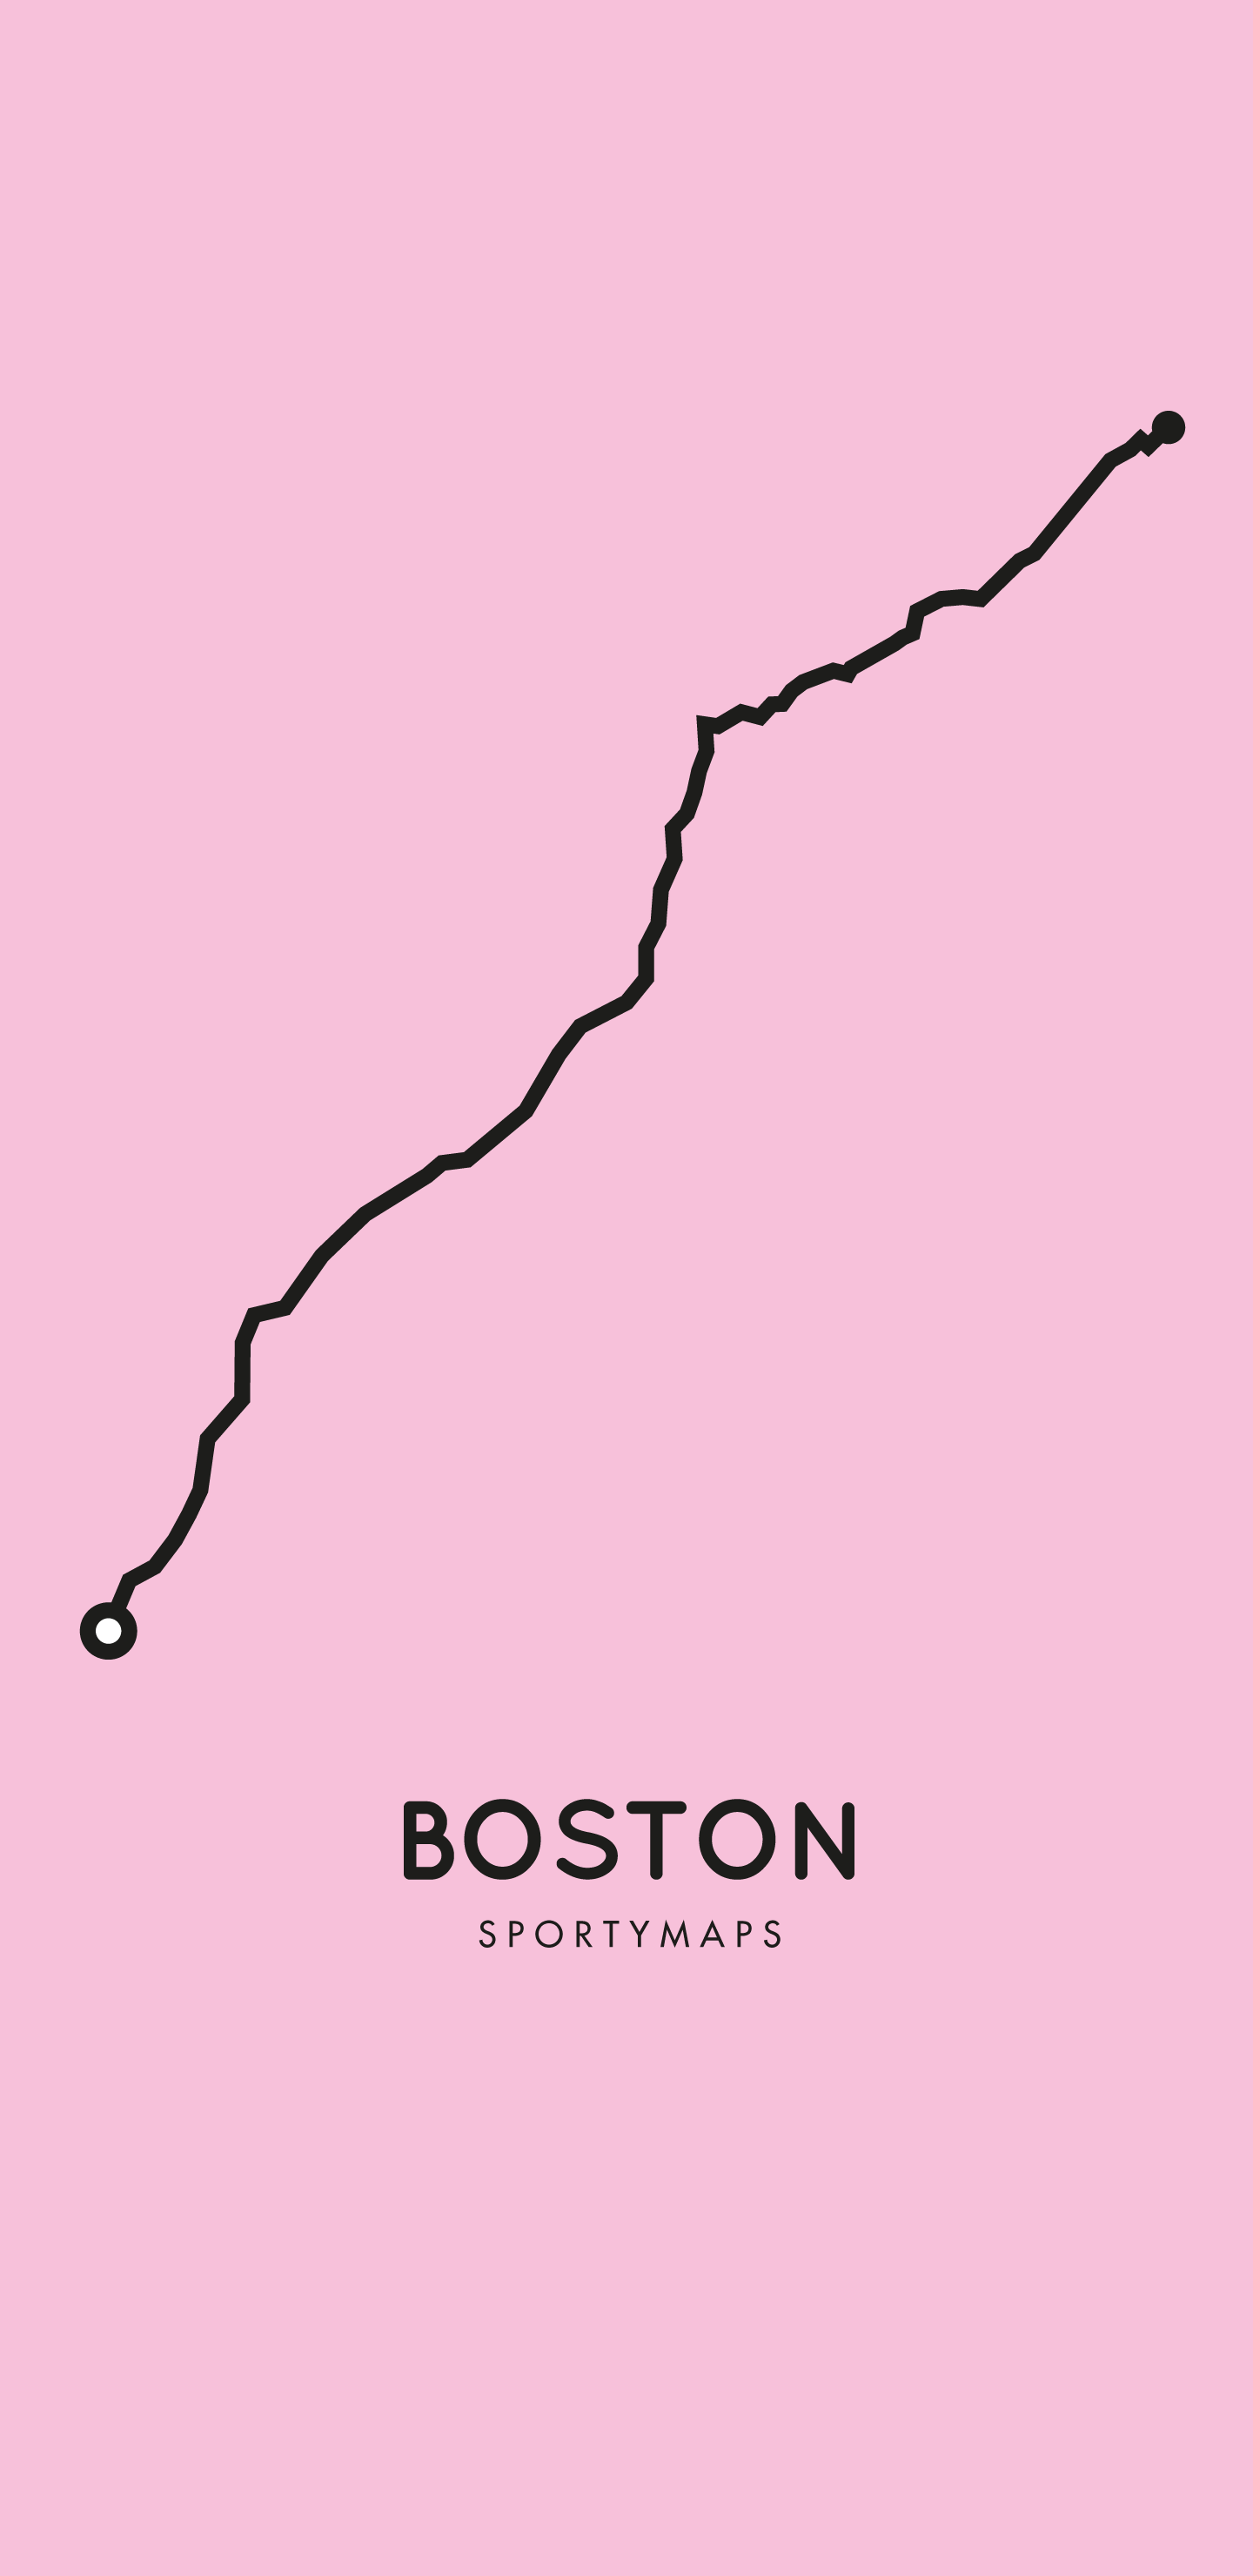 Sportymaps-Boston-marathon-pink